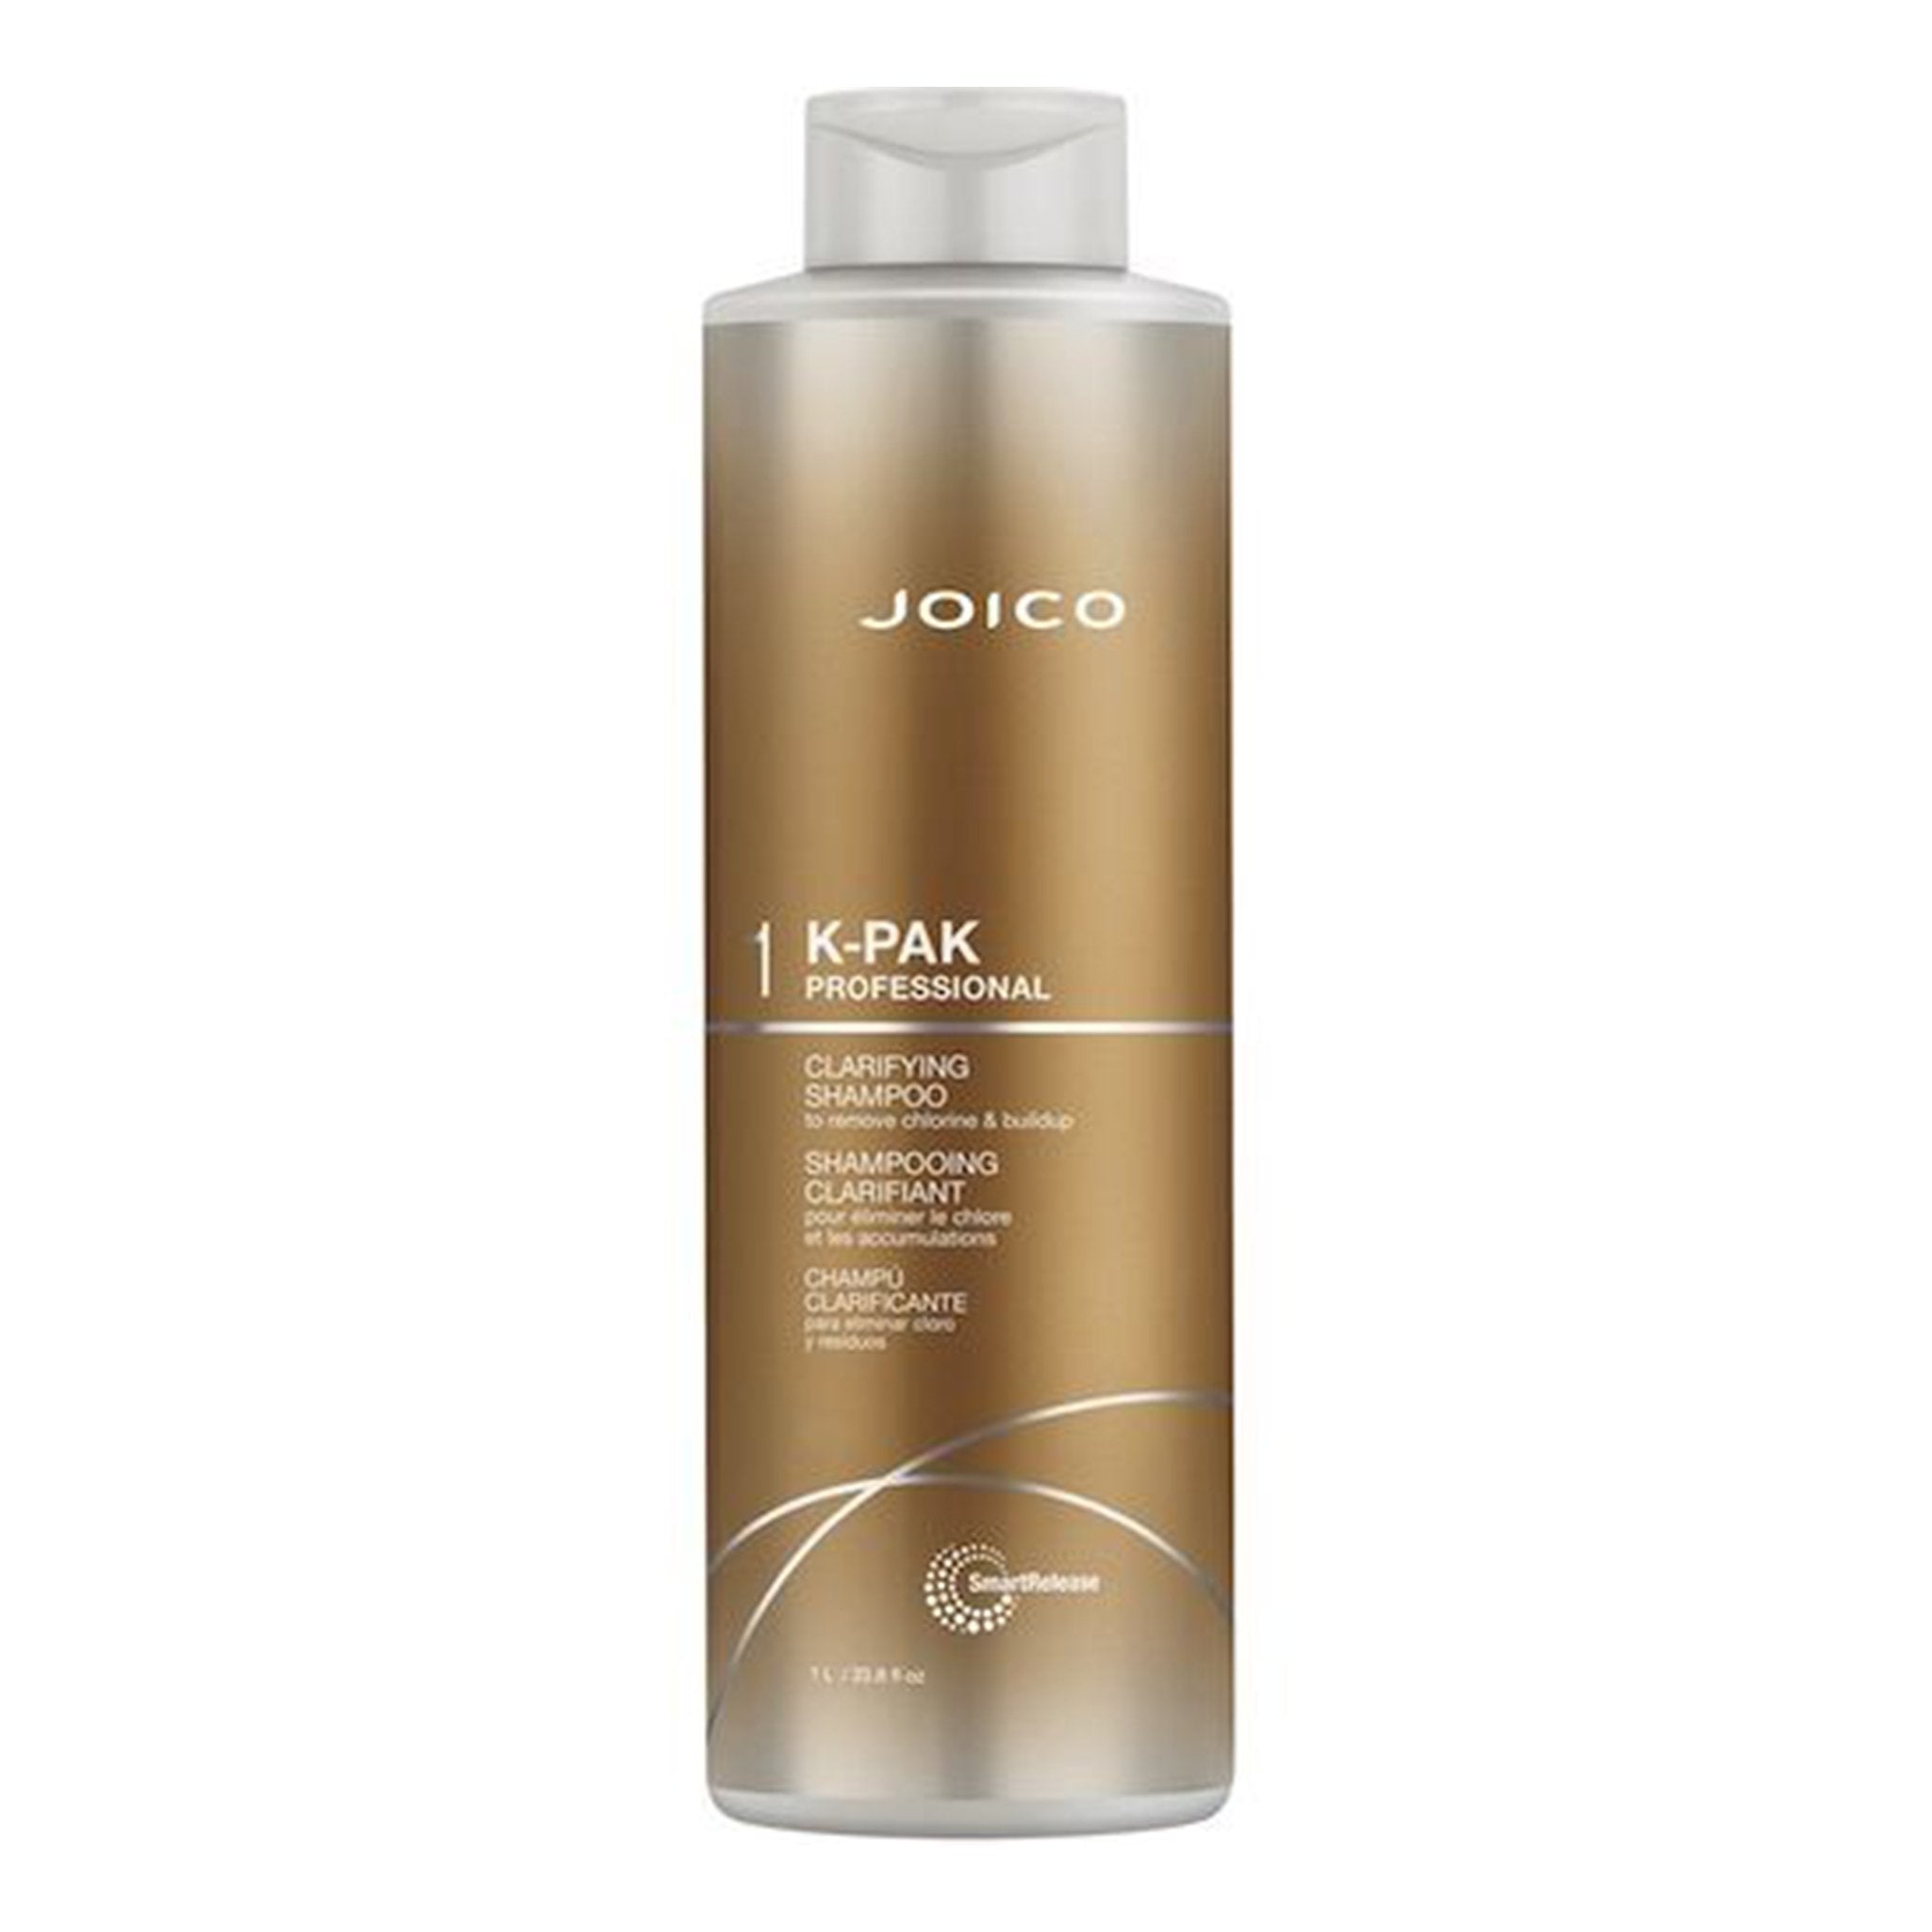 Joico. Shampoing Clarifiant K-Pak - 1000 ml - Concept C. Shop